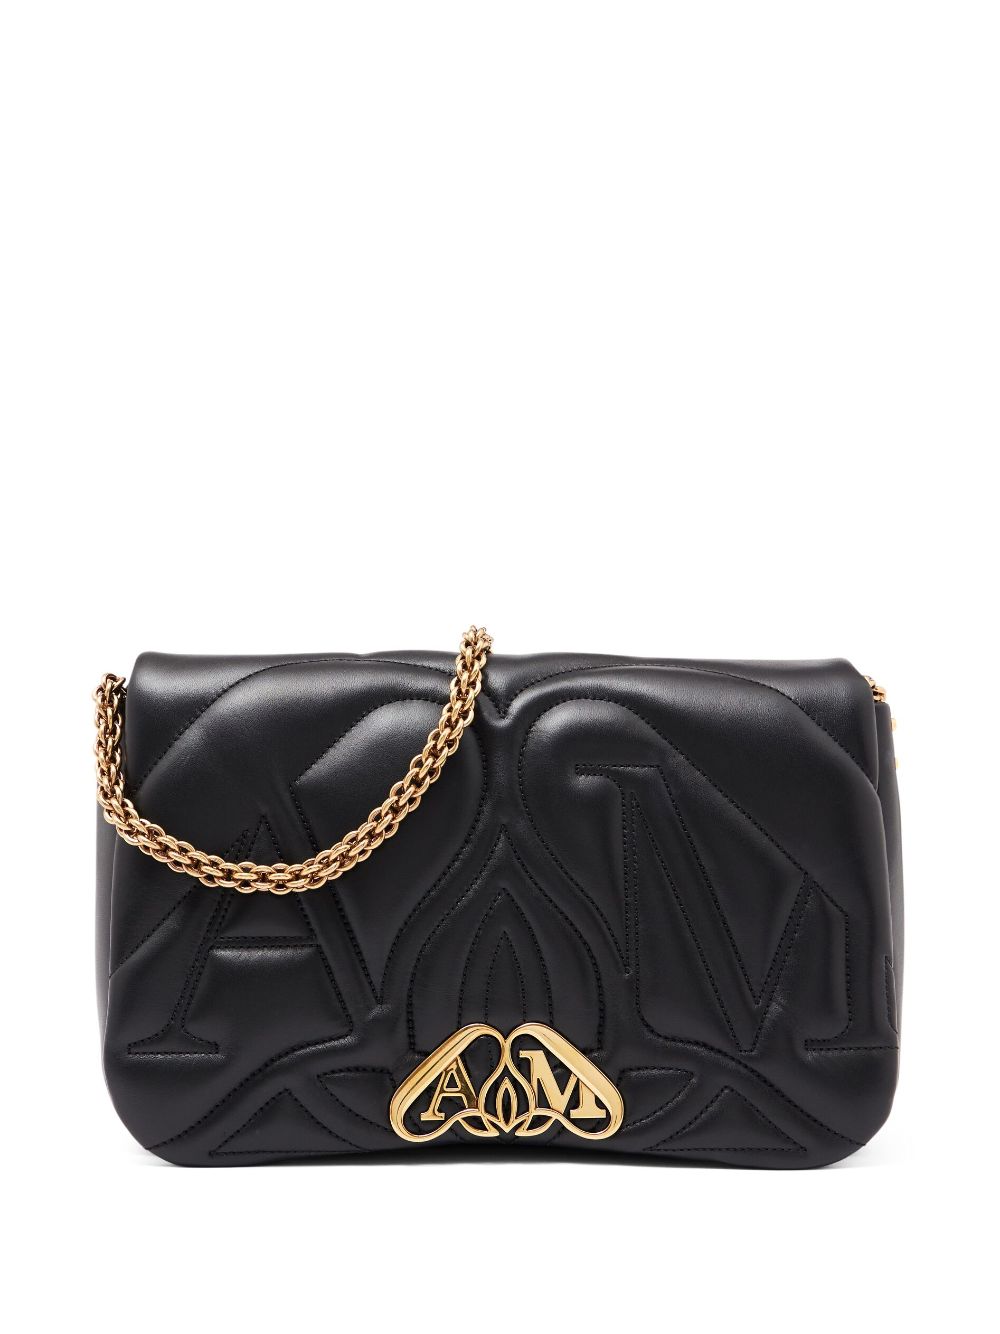 ALEXANDER MCQUEEN Black Quilted Leather Shoulder Handbag for Women - FW23